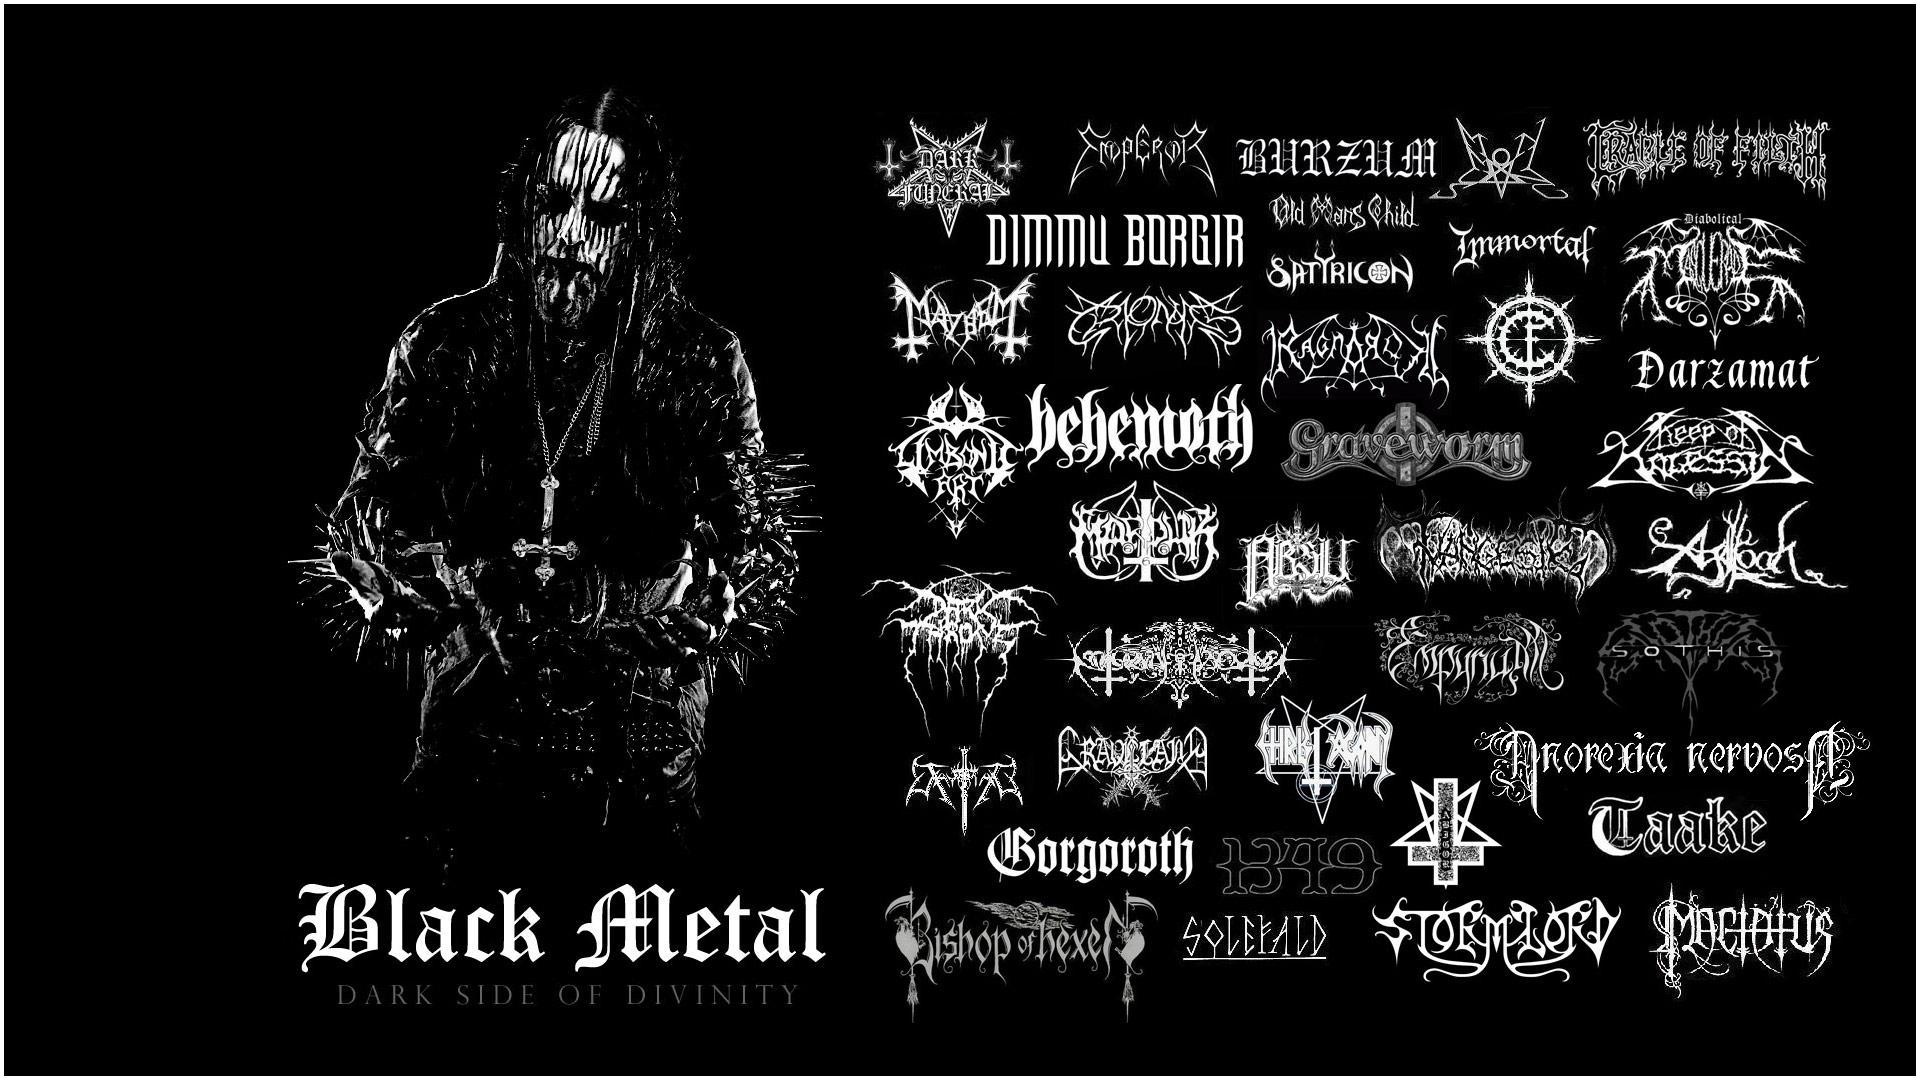 Heavy Metal Wallpaper Group (142)